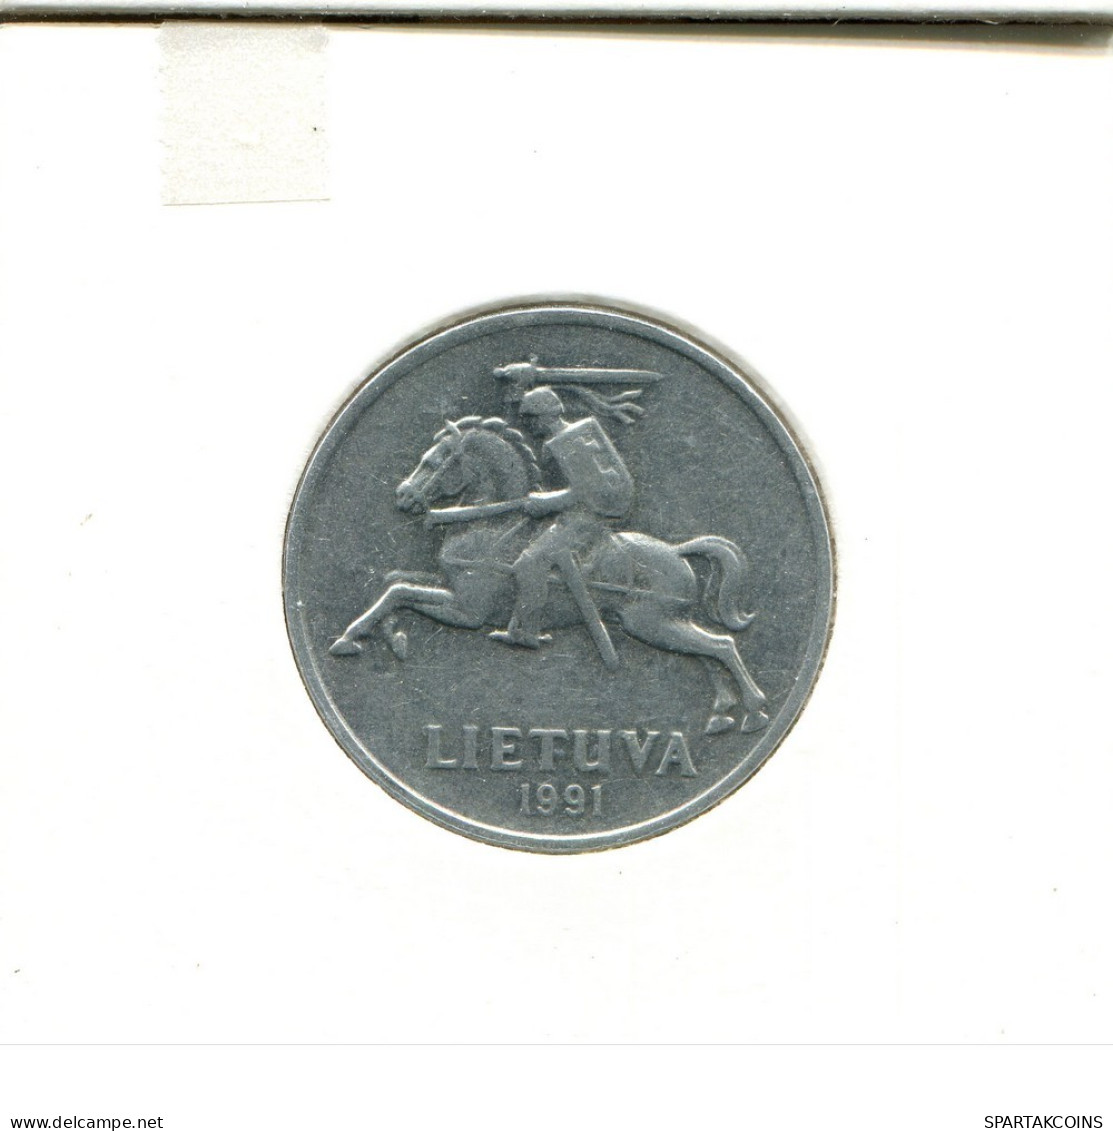 5 CENTAI 1991 LITHUANIA Coin #AS695.U.A - Lithuania